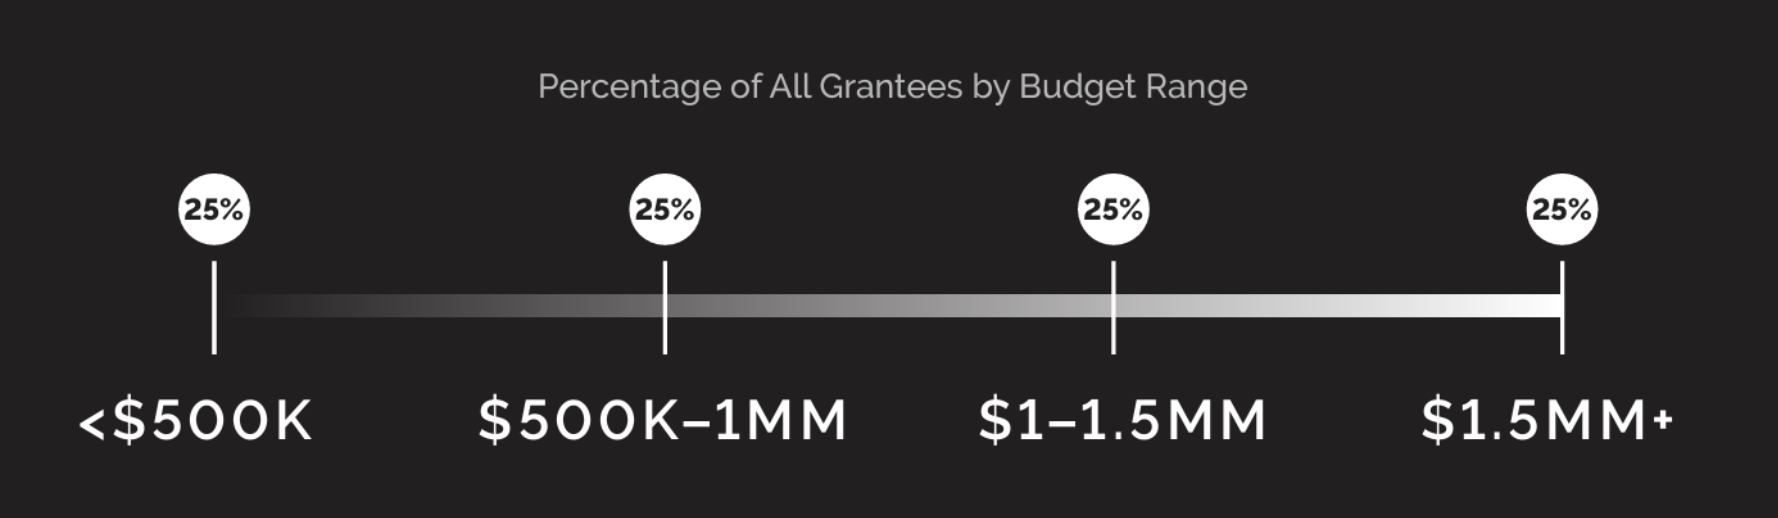 Percentage of grantees by budget range